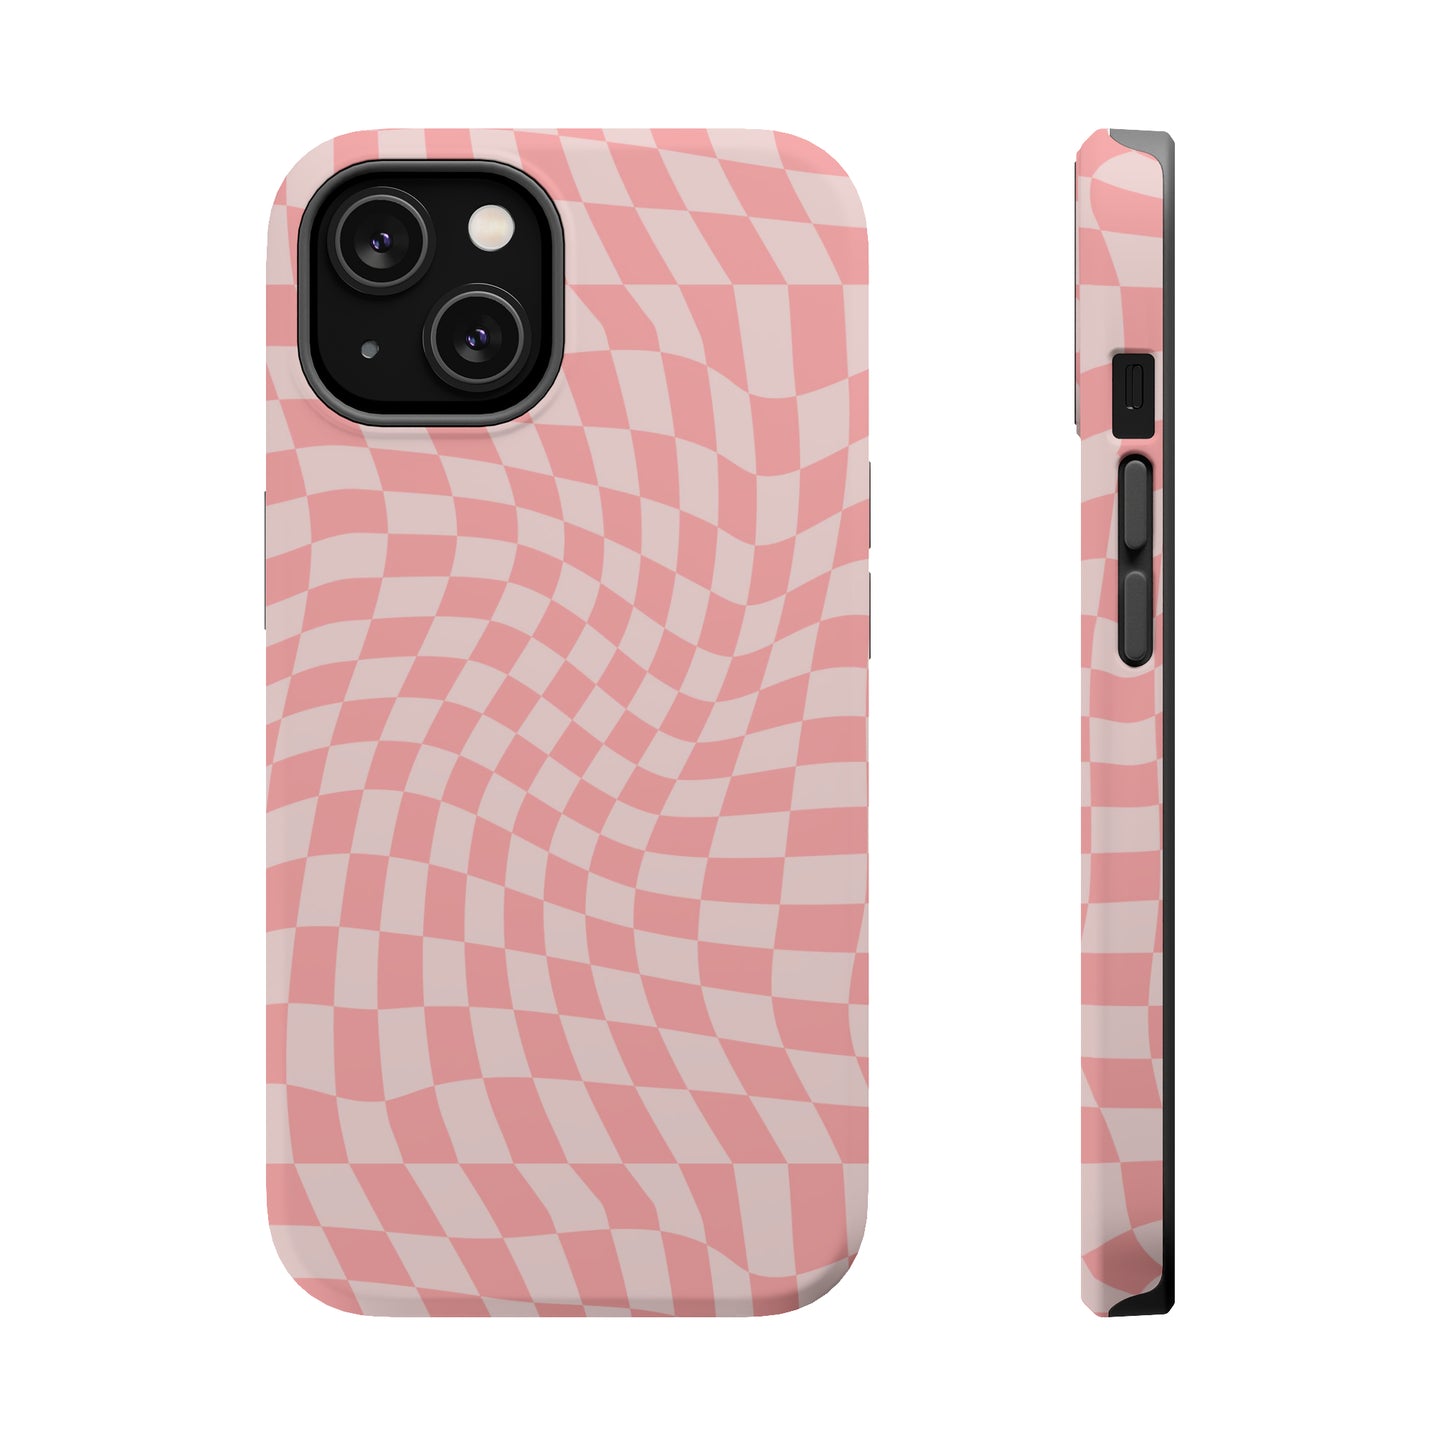 Wavy Pink Checkerboard Case